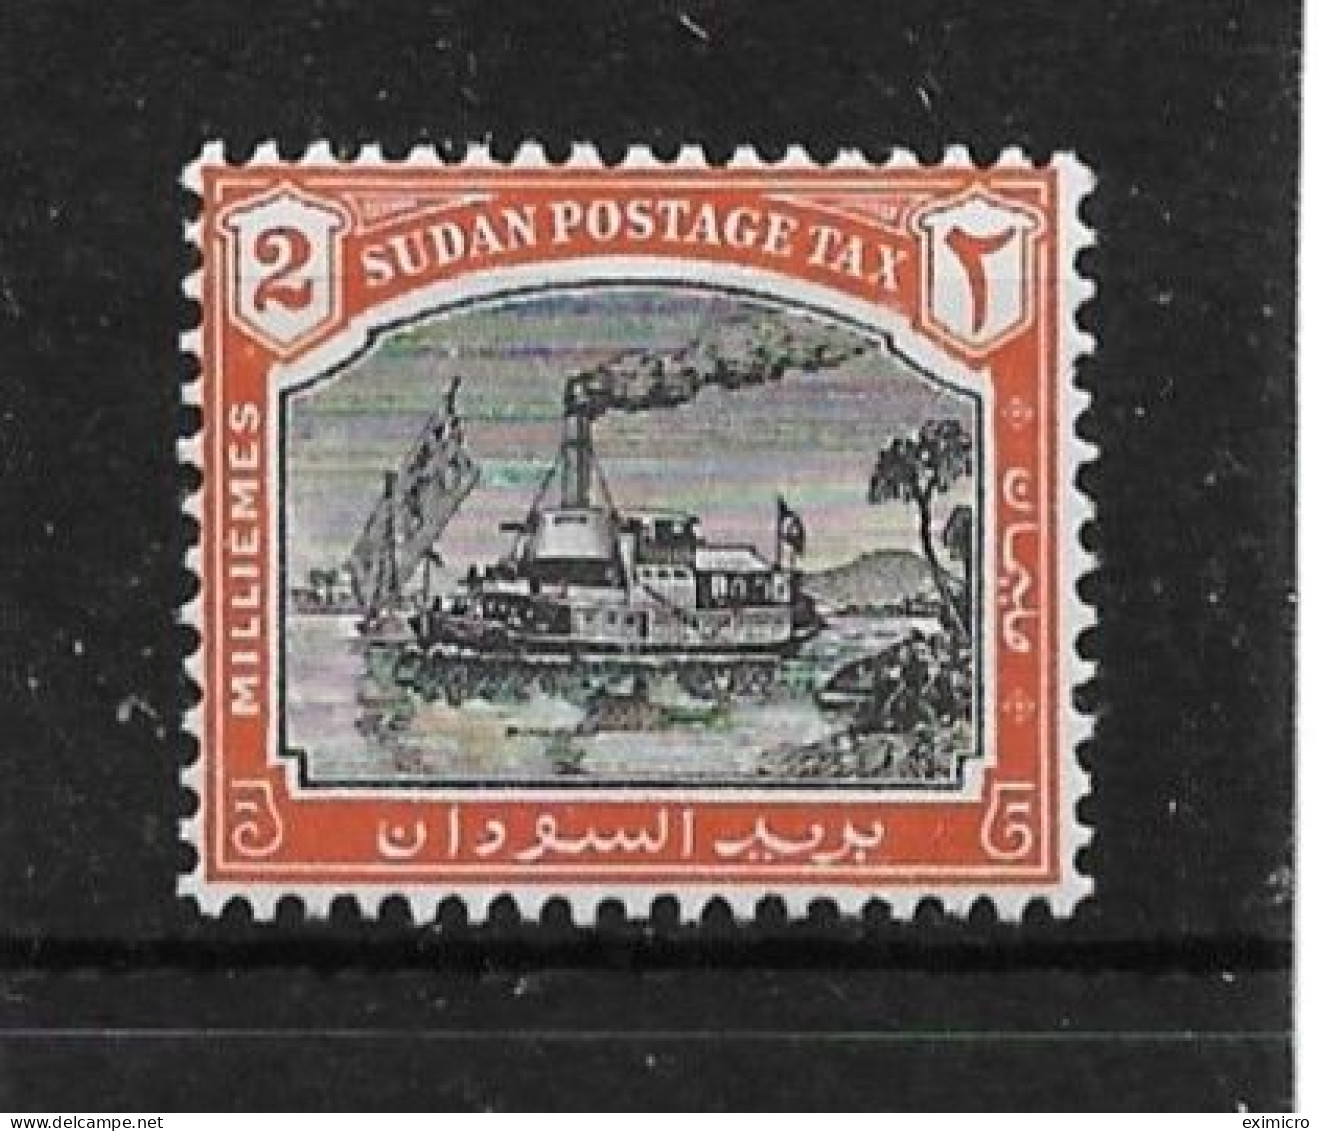 SUDAN 1948 2m POSTAGE DUE  SG D12 UNMOUNTED MINT Cat £5.50 - Soudan (...-1951)